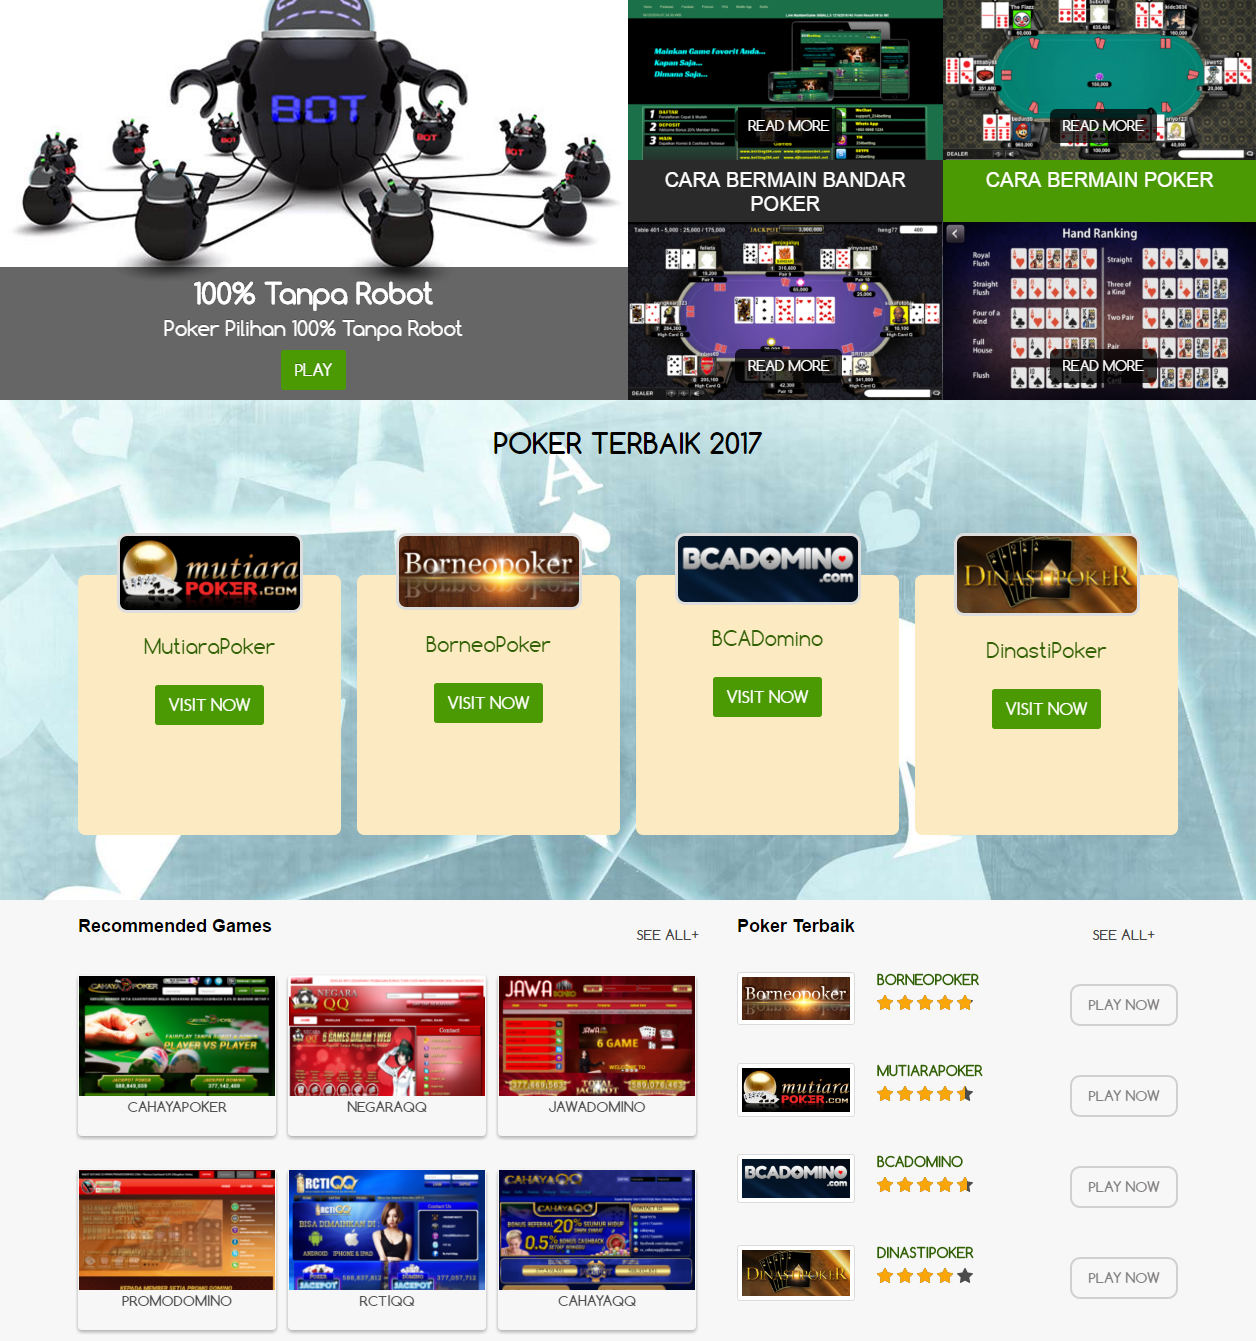 Cherry77.com Situs Agen Poker Terpercaya Domino Online Judi Togel Dan Bandar Bola | Alexander